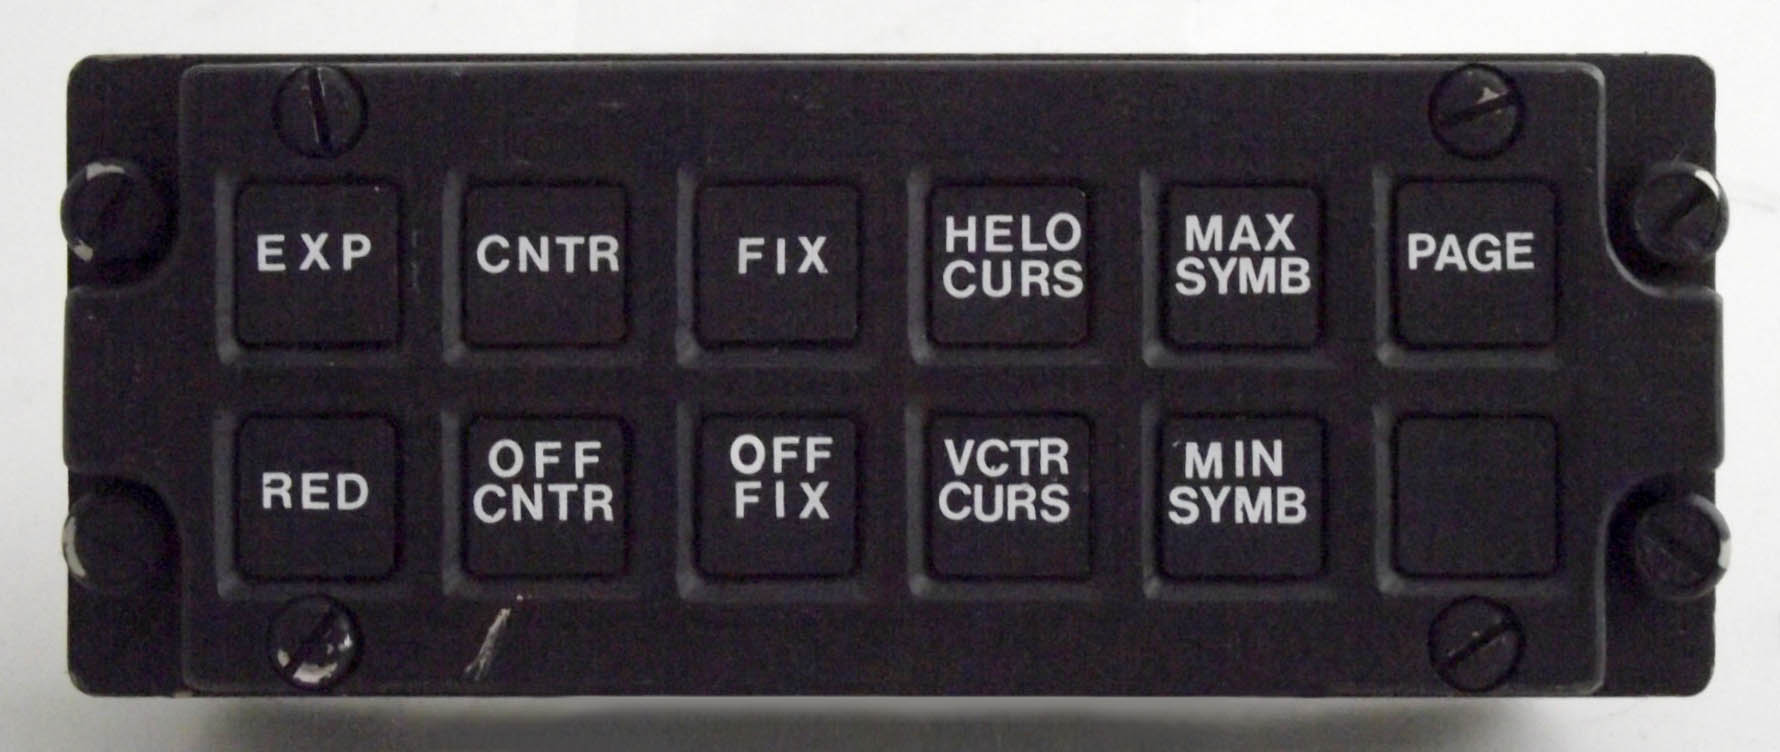 Common Command Unit Remote  Keyboard 1 Model